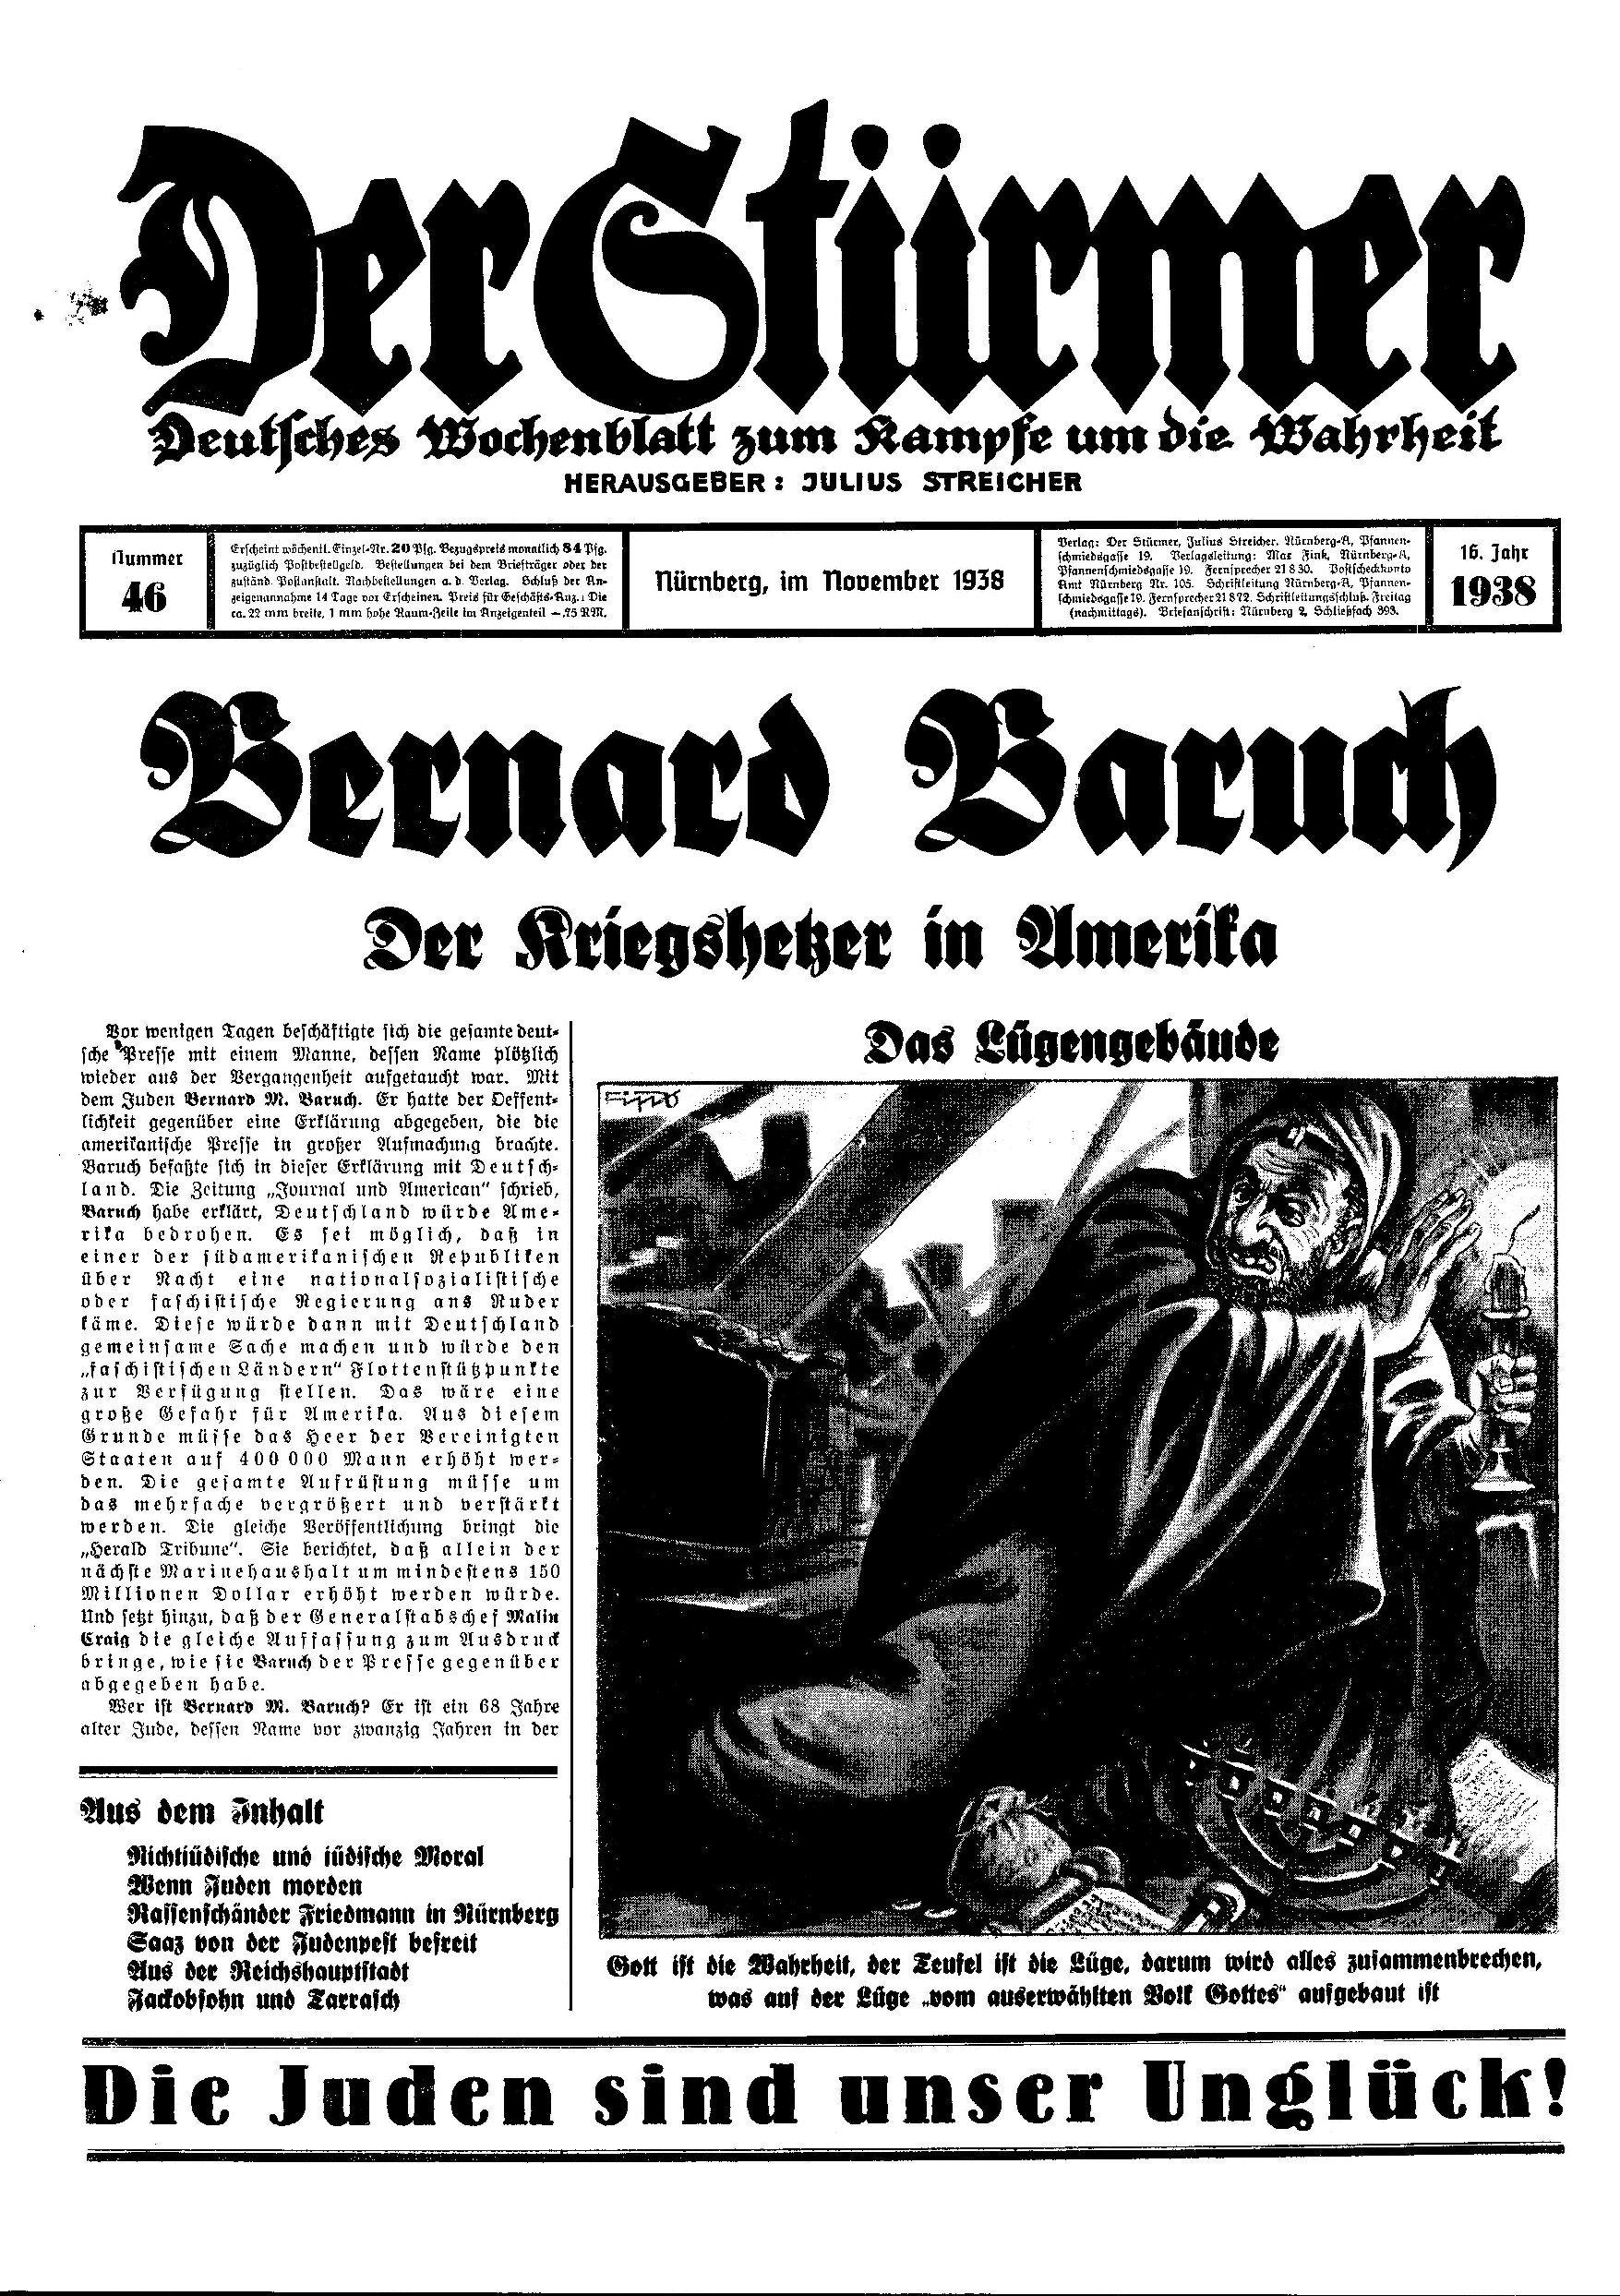 Der Stürmer - 1938 Nr. 46 - Bernard Baruch